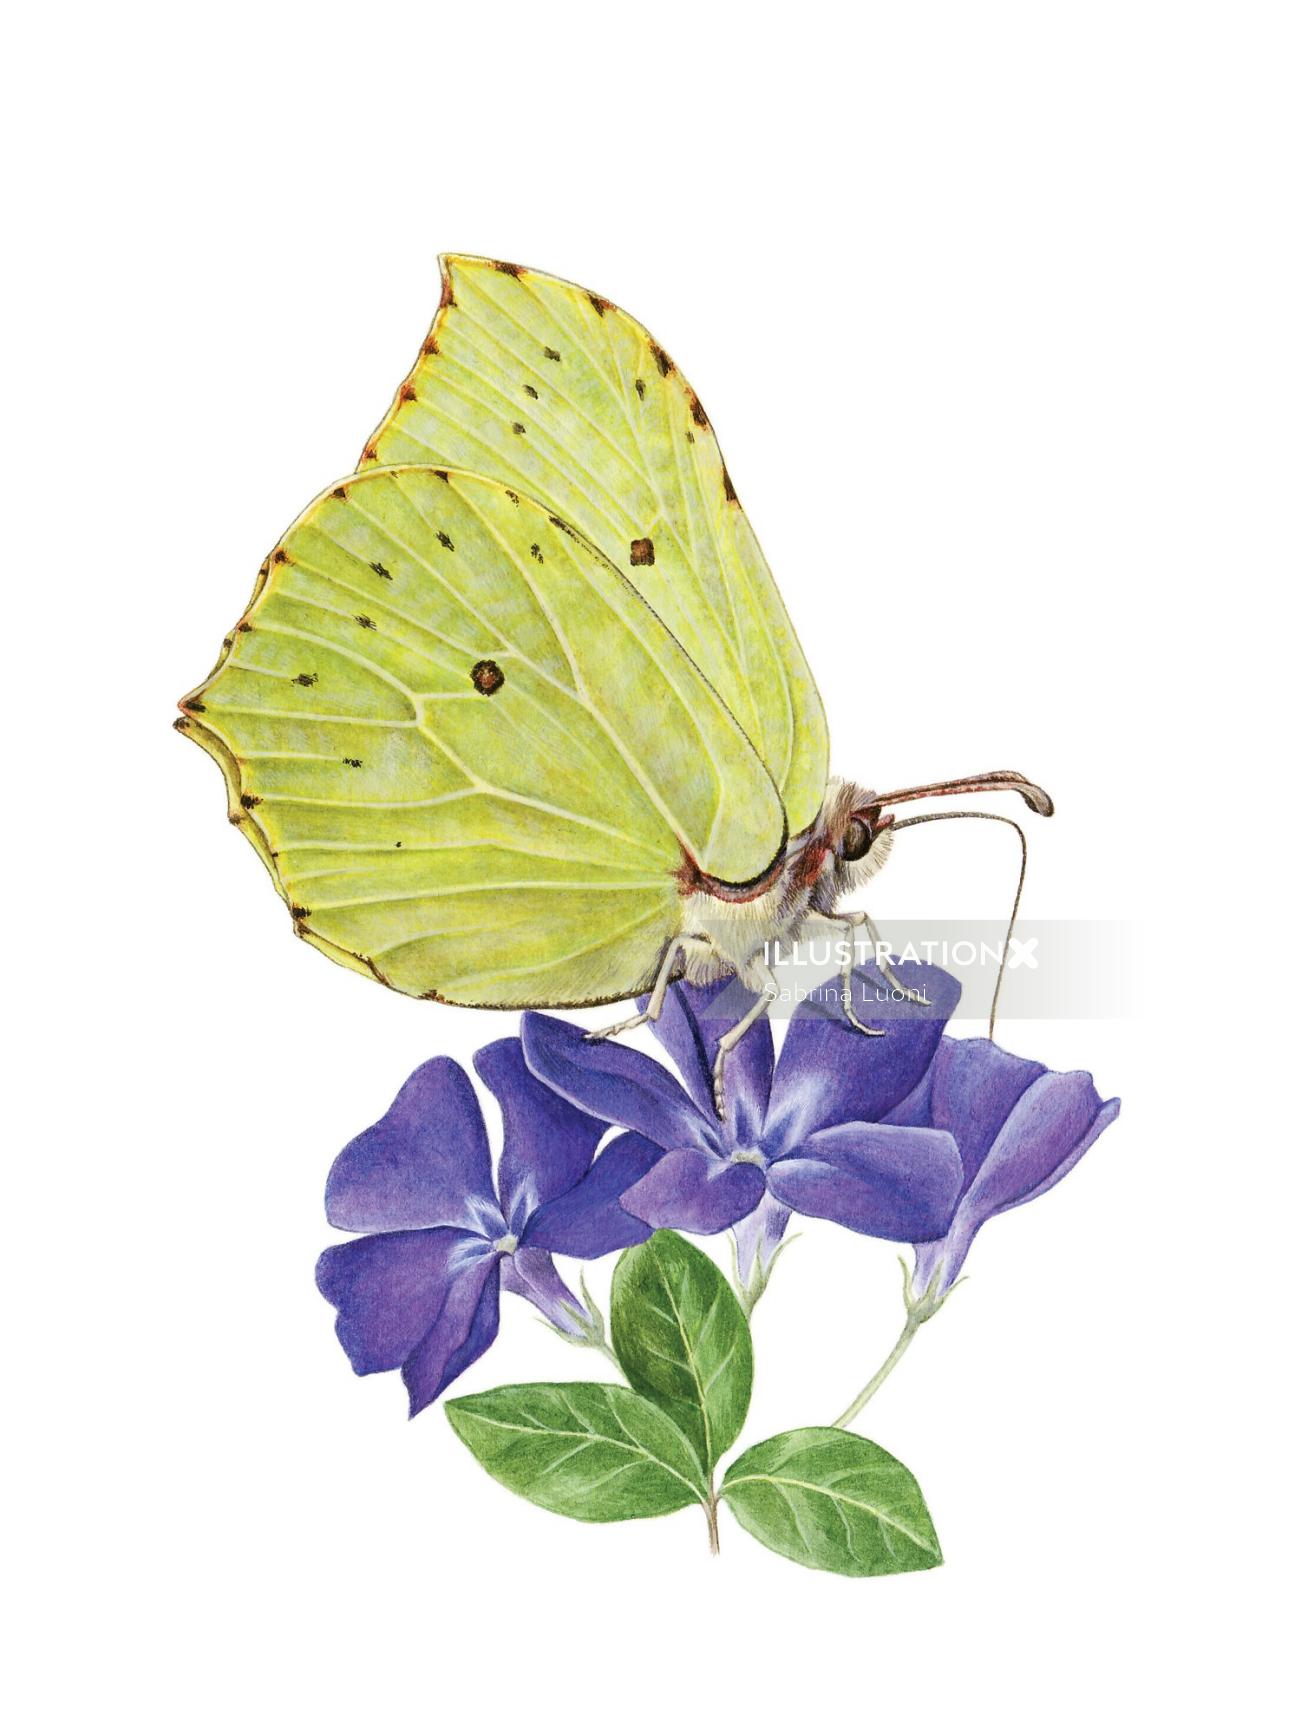 Brimstone Butterfly photorealistic art